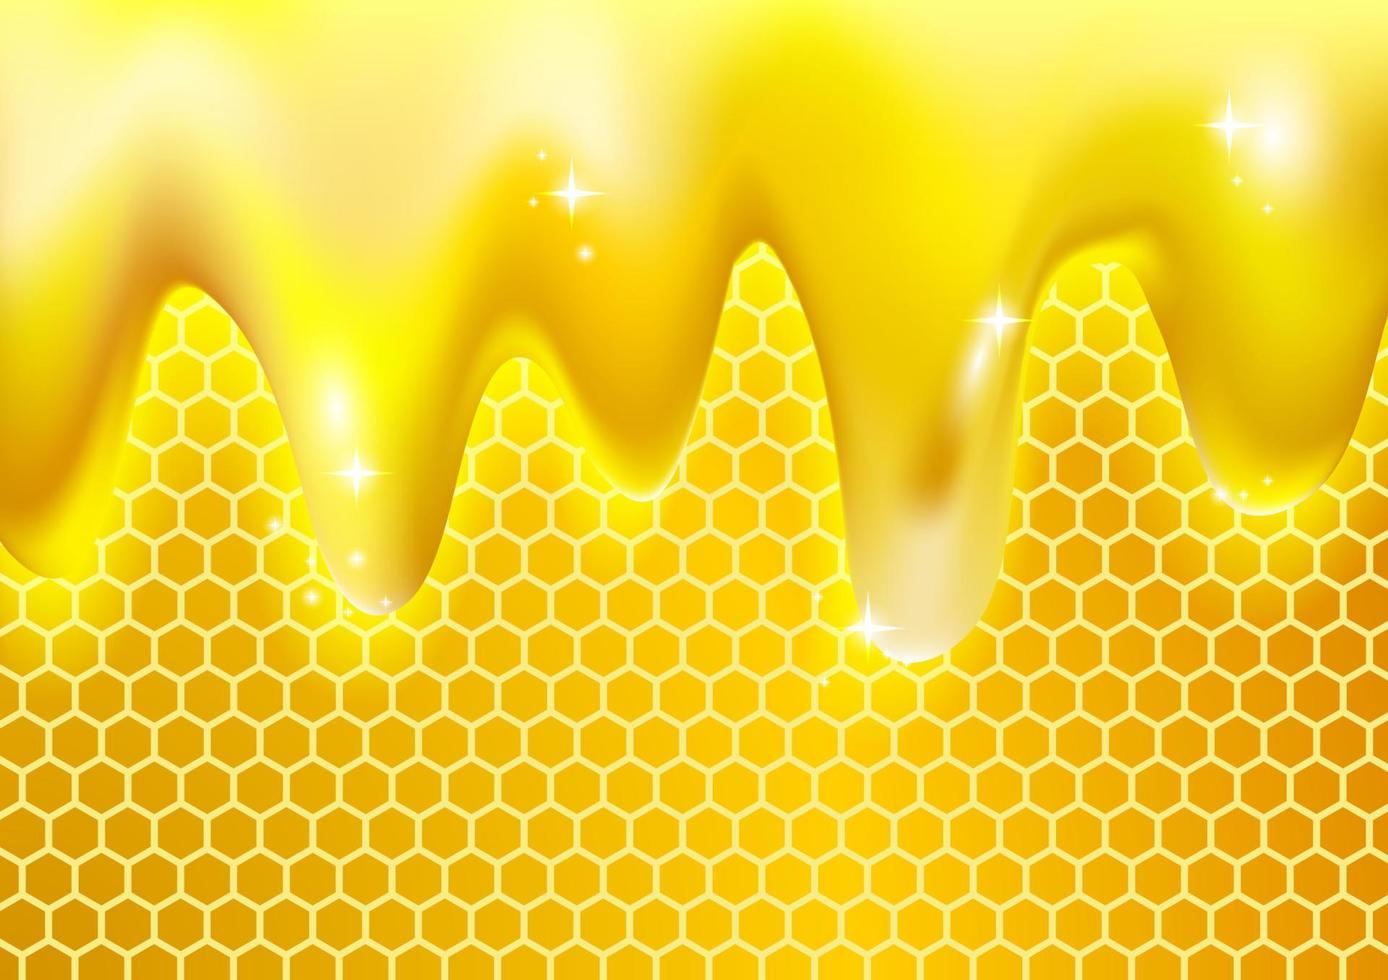 colmena en pantalla dorada. fondo de patrón hexagonal abstracto. diseño hexagonal. gotas de miel de jarabe amarillo dorado realista o salpicaduras de gotas de aceite líquido vector